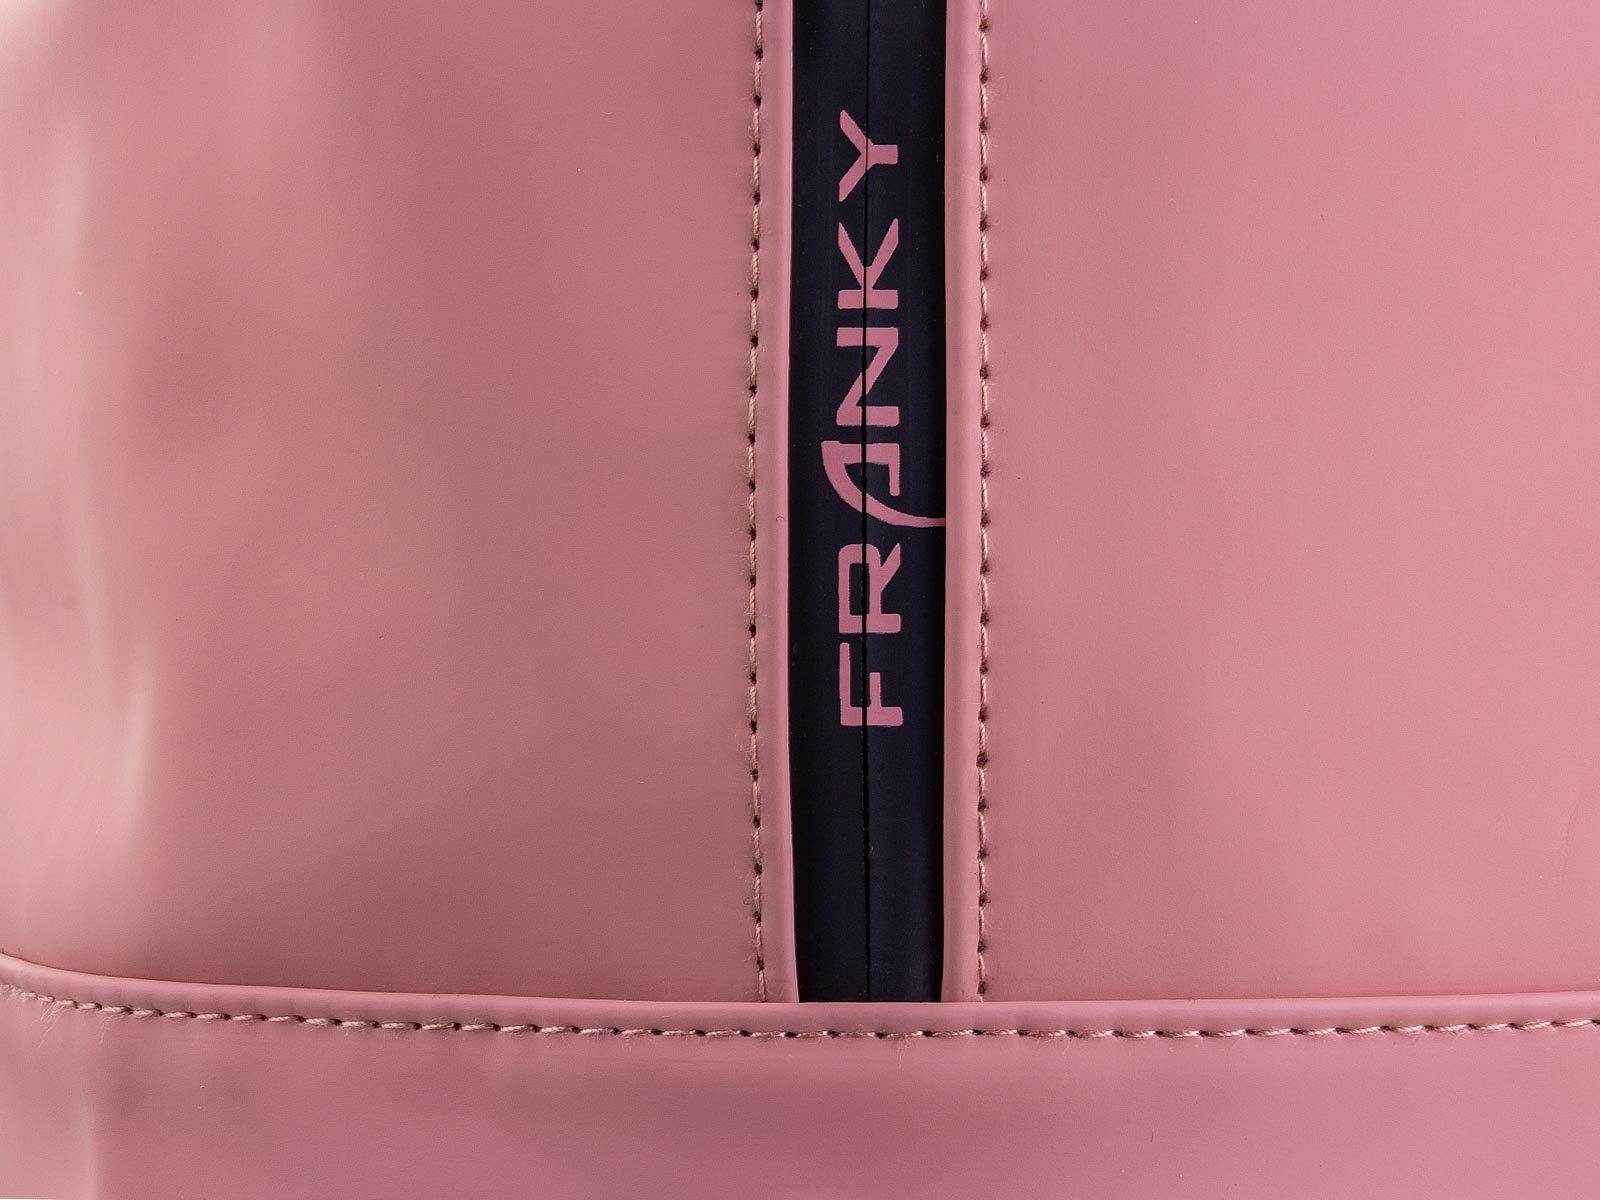 Franky Rucksack RS60 Freizeitrucksack rose